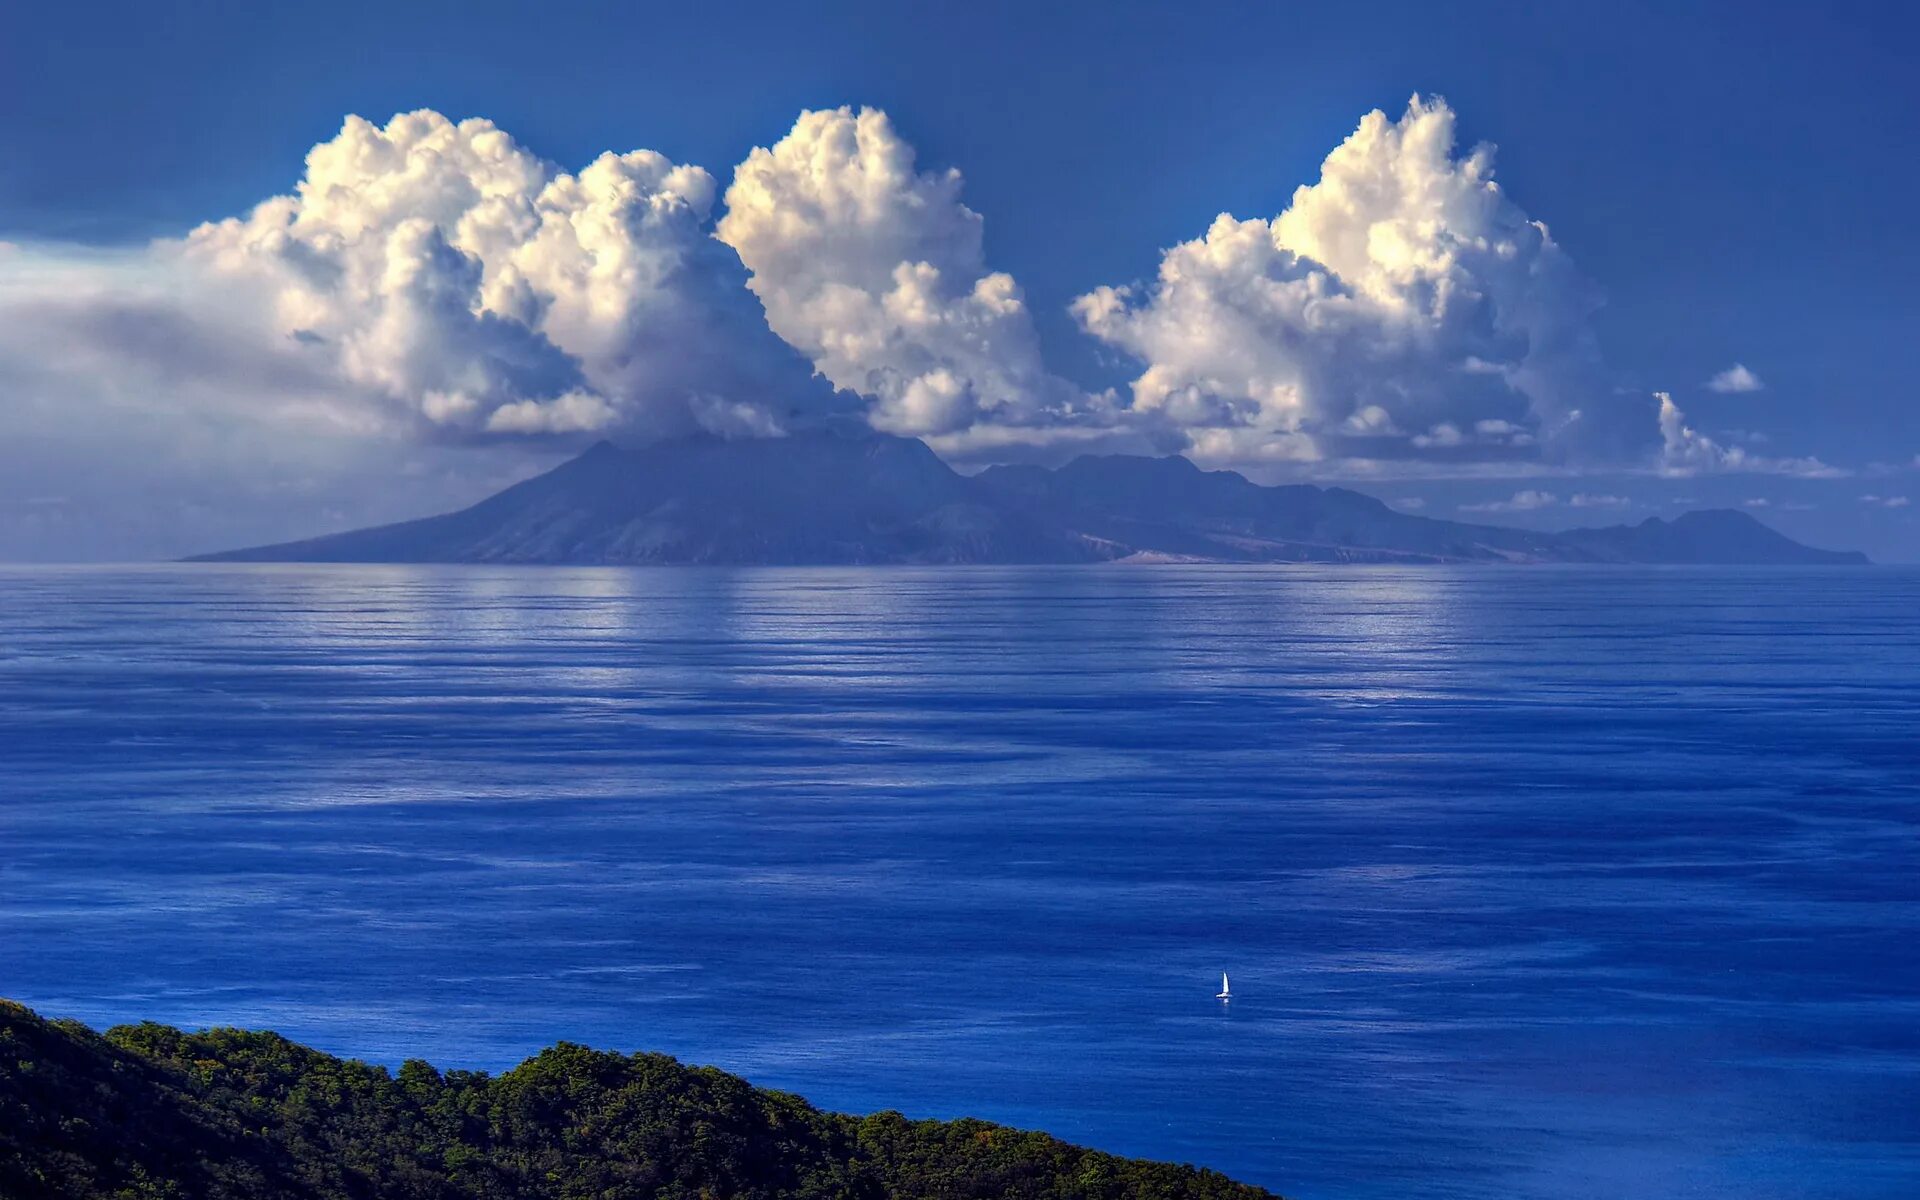 Океан рядом. Остров Лингшан Филиппинское море. Море и горы. Небо море облака. Море и небо.